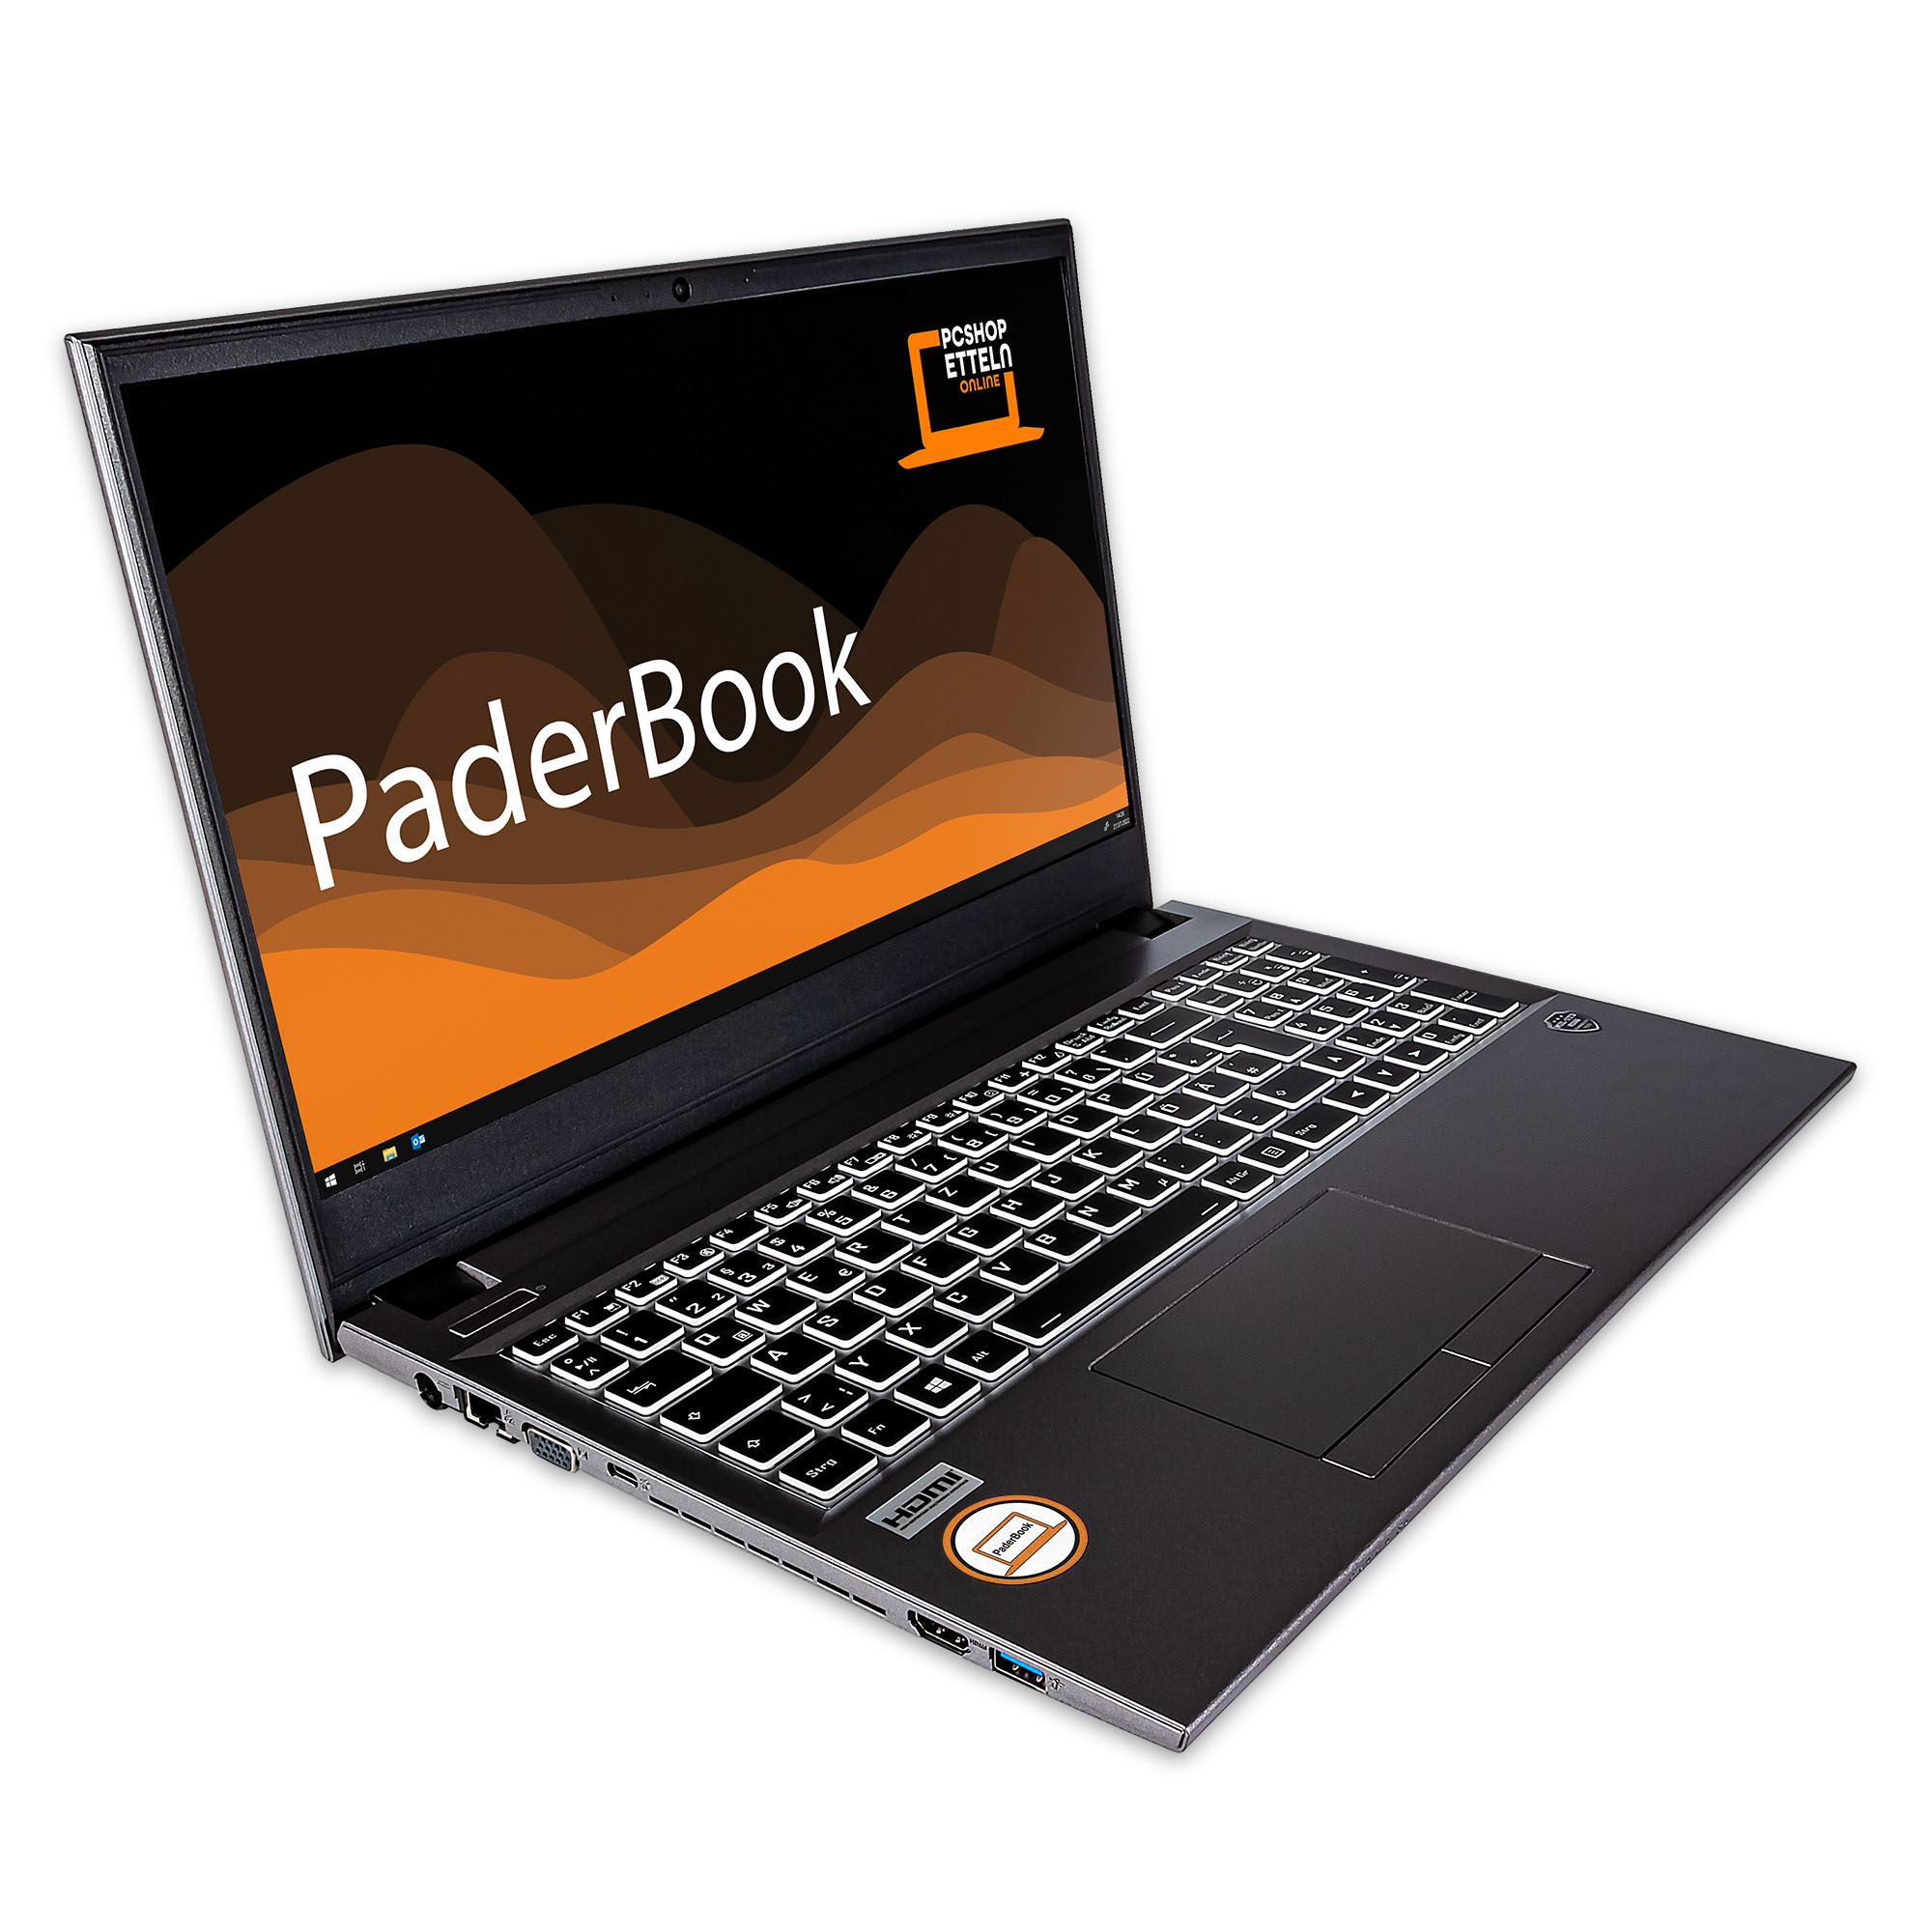 Notebook GB aktiviert, installiert Display, Silber PADERBOOK GB Zoll 64 RAM, fertig i75, 15,6 1000 Basic und Metallic SSD, mit